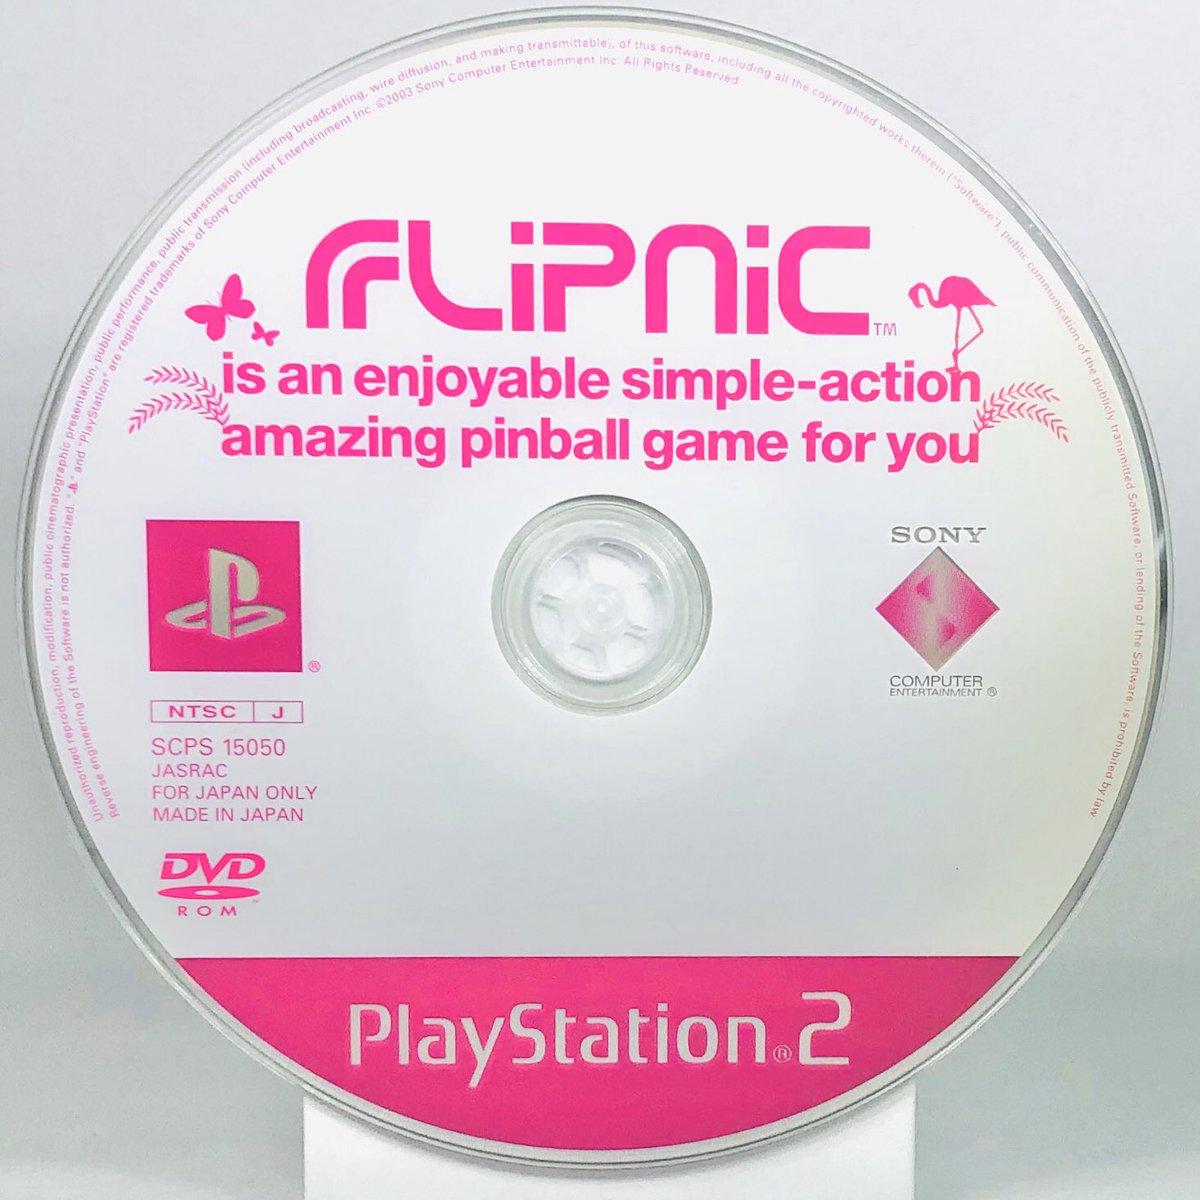 FlipnicCapcomPlayStation2, 2005